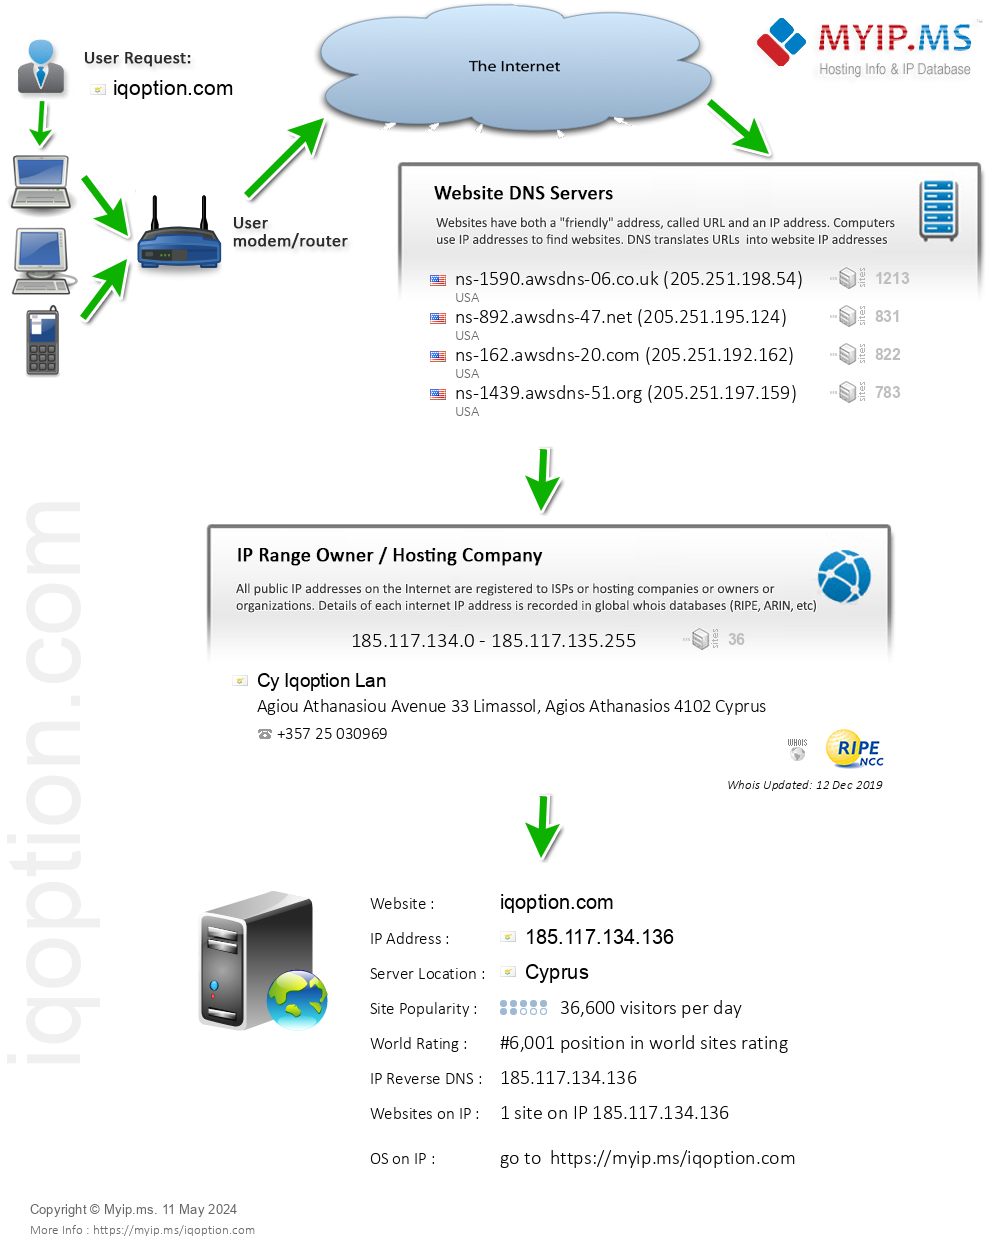 Iqoption.com - Website Hosting Visual IP Diagram